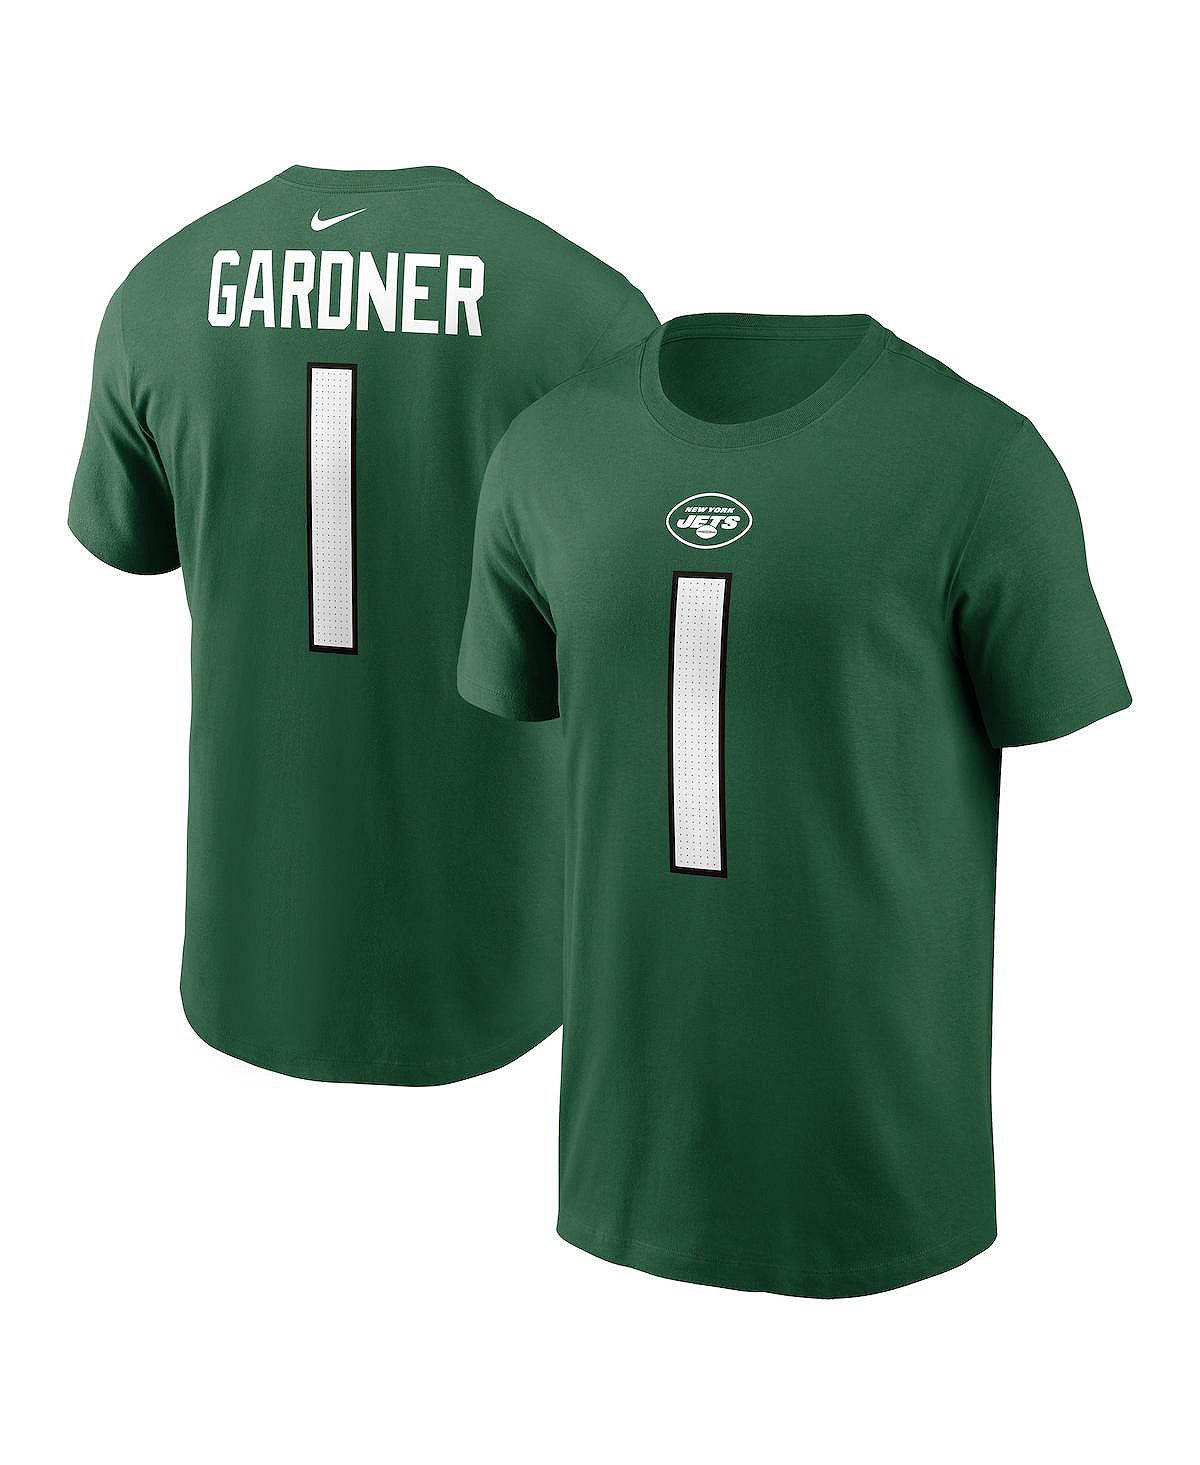 gardner charlie dinosaurs Мужская футболка Sauce Gardner Green New York Jets с именем и номером игрока Nike